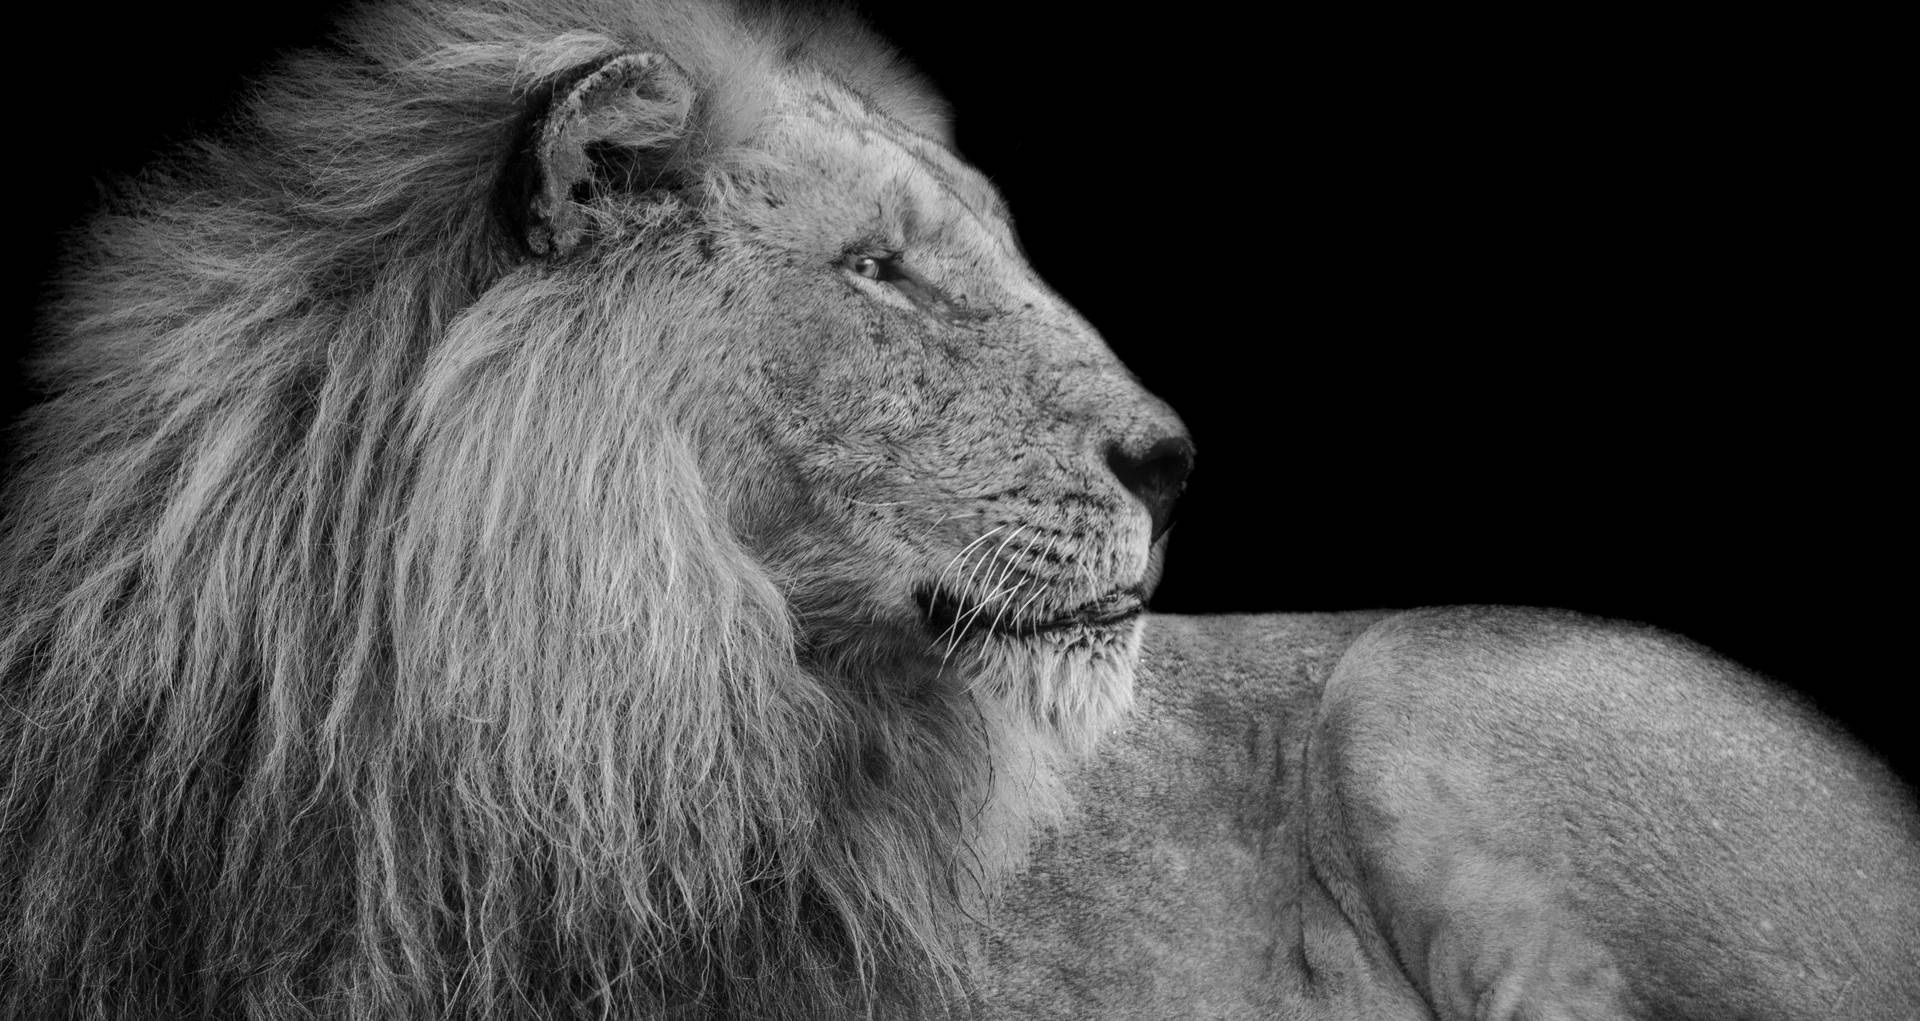 Majestic Lion In Its Natural Habitat Wallpaper